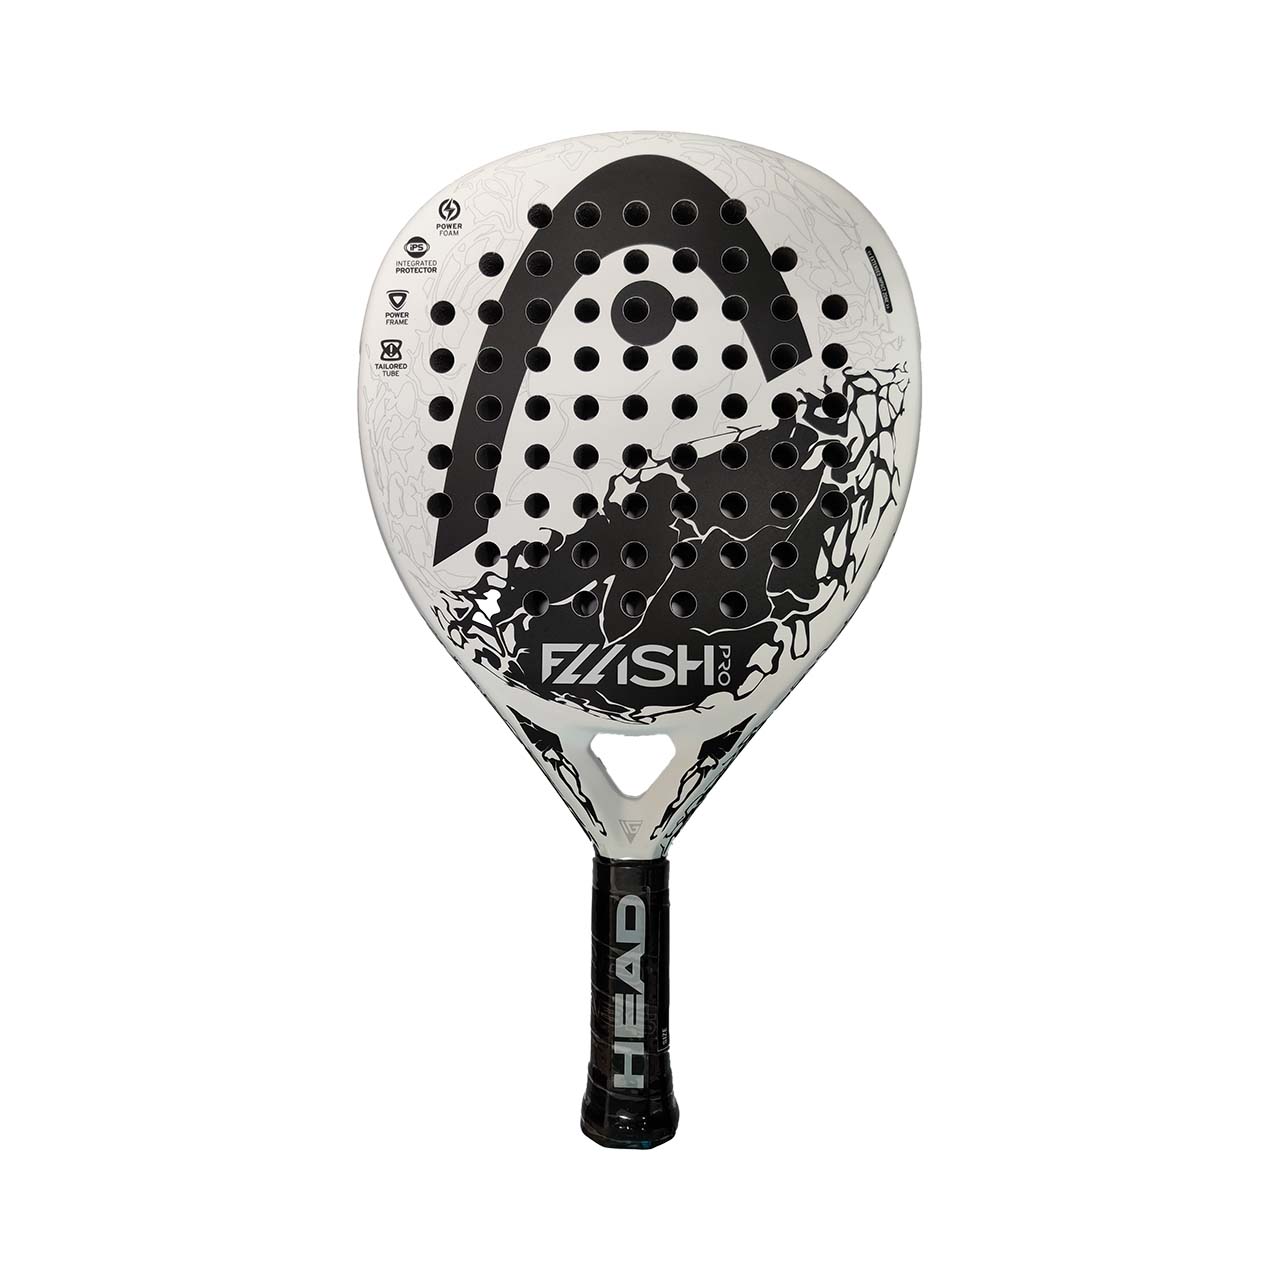 sport service italia padel racket head flash pro 2.0 - Racchette Paddle - Sport Service Italia